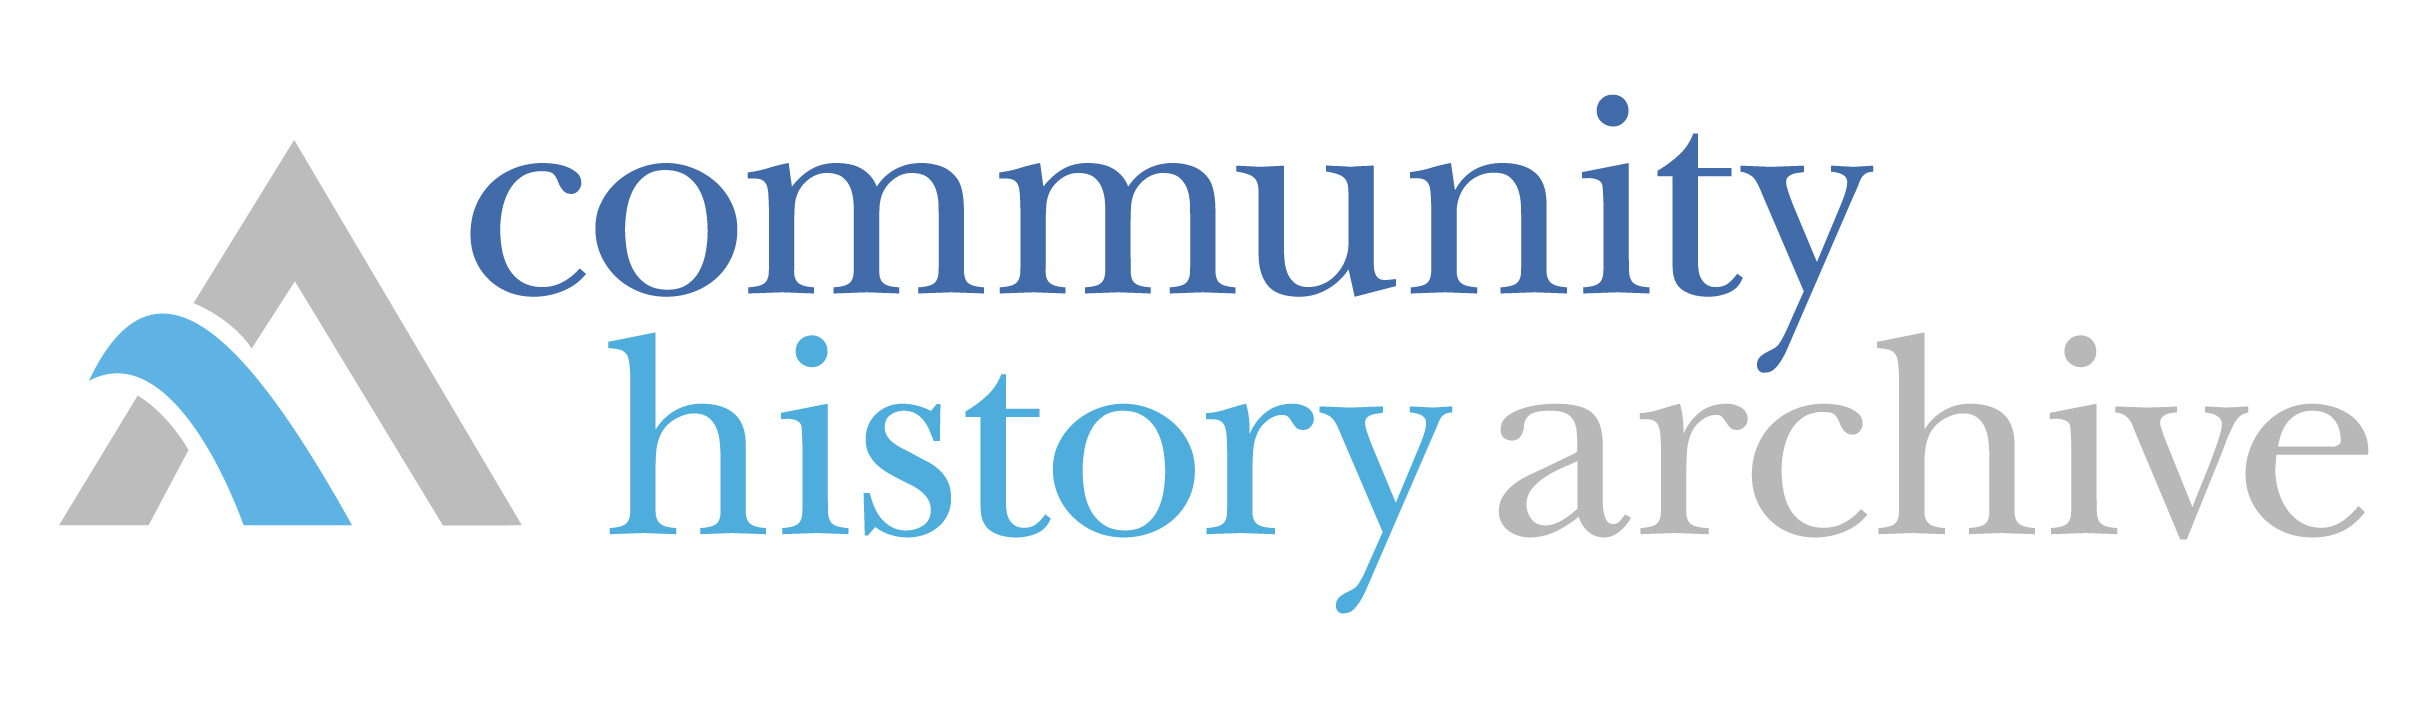 Community History Archive Logo